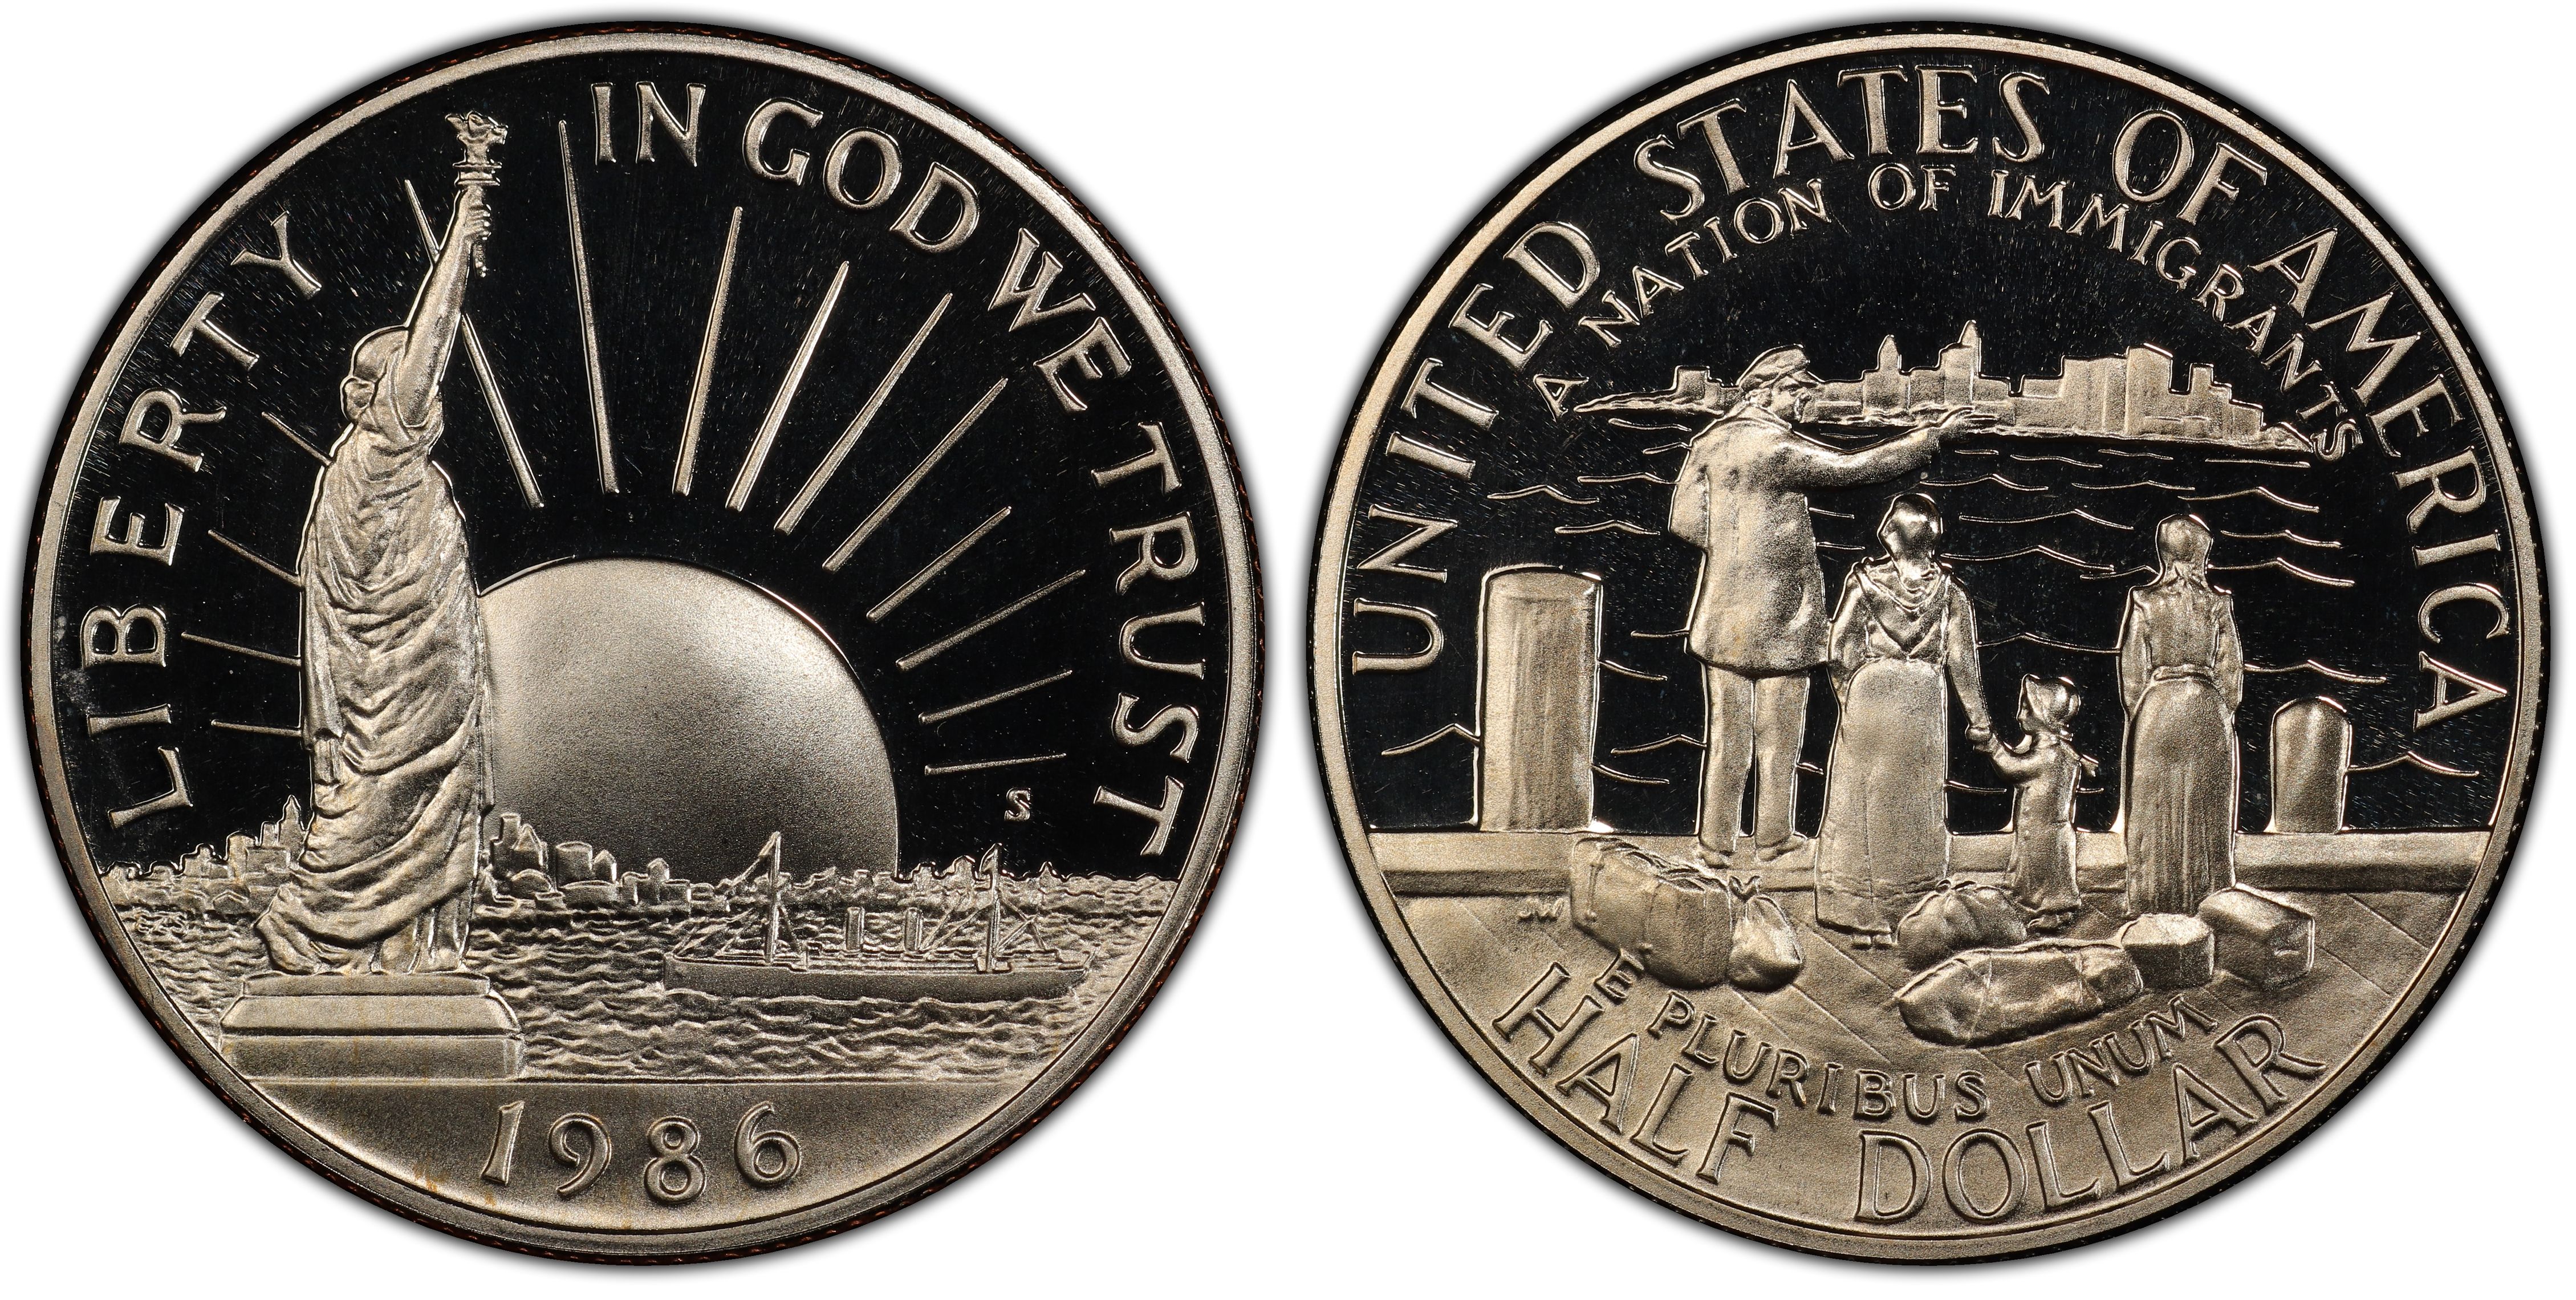 1986 Statue of Liberty Proof Half Dollar Commemorative Coin US Mint